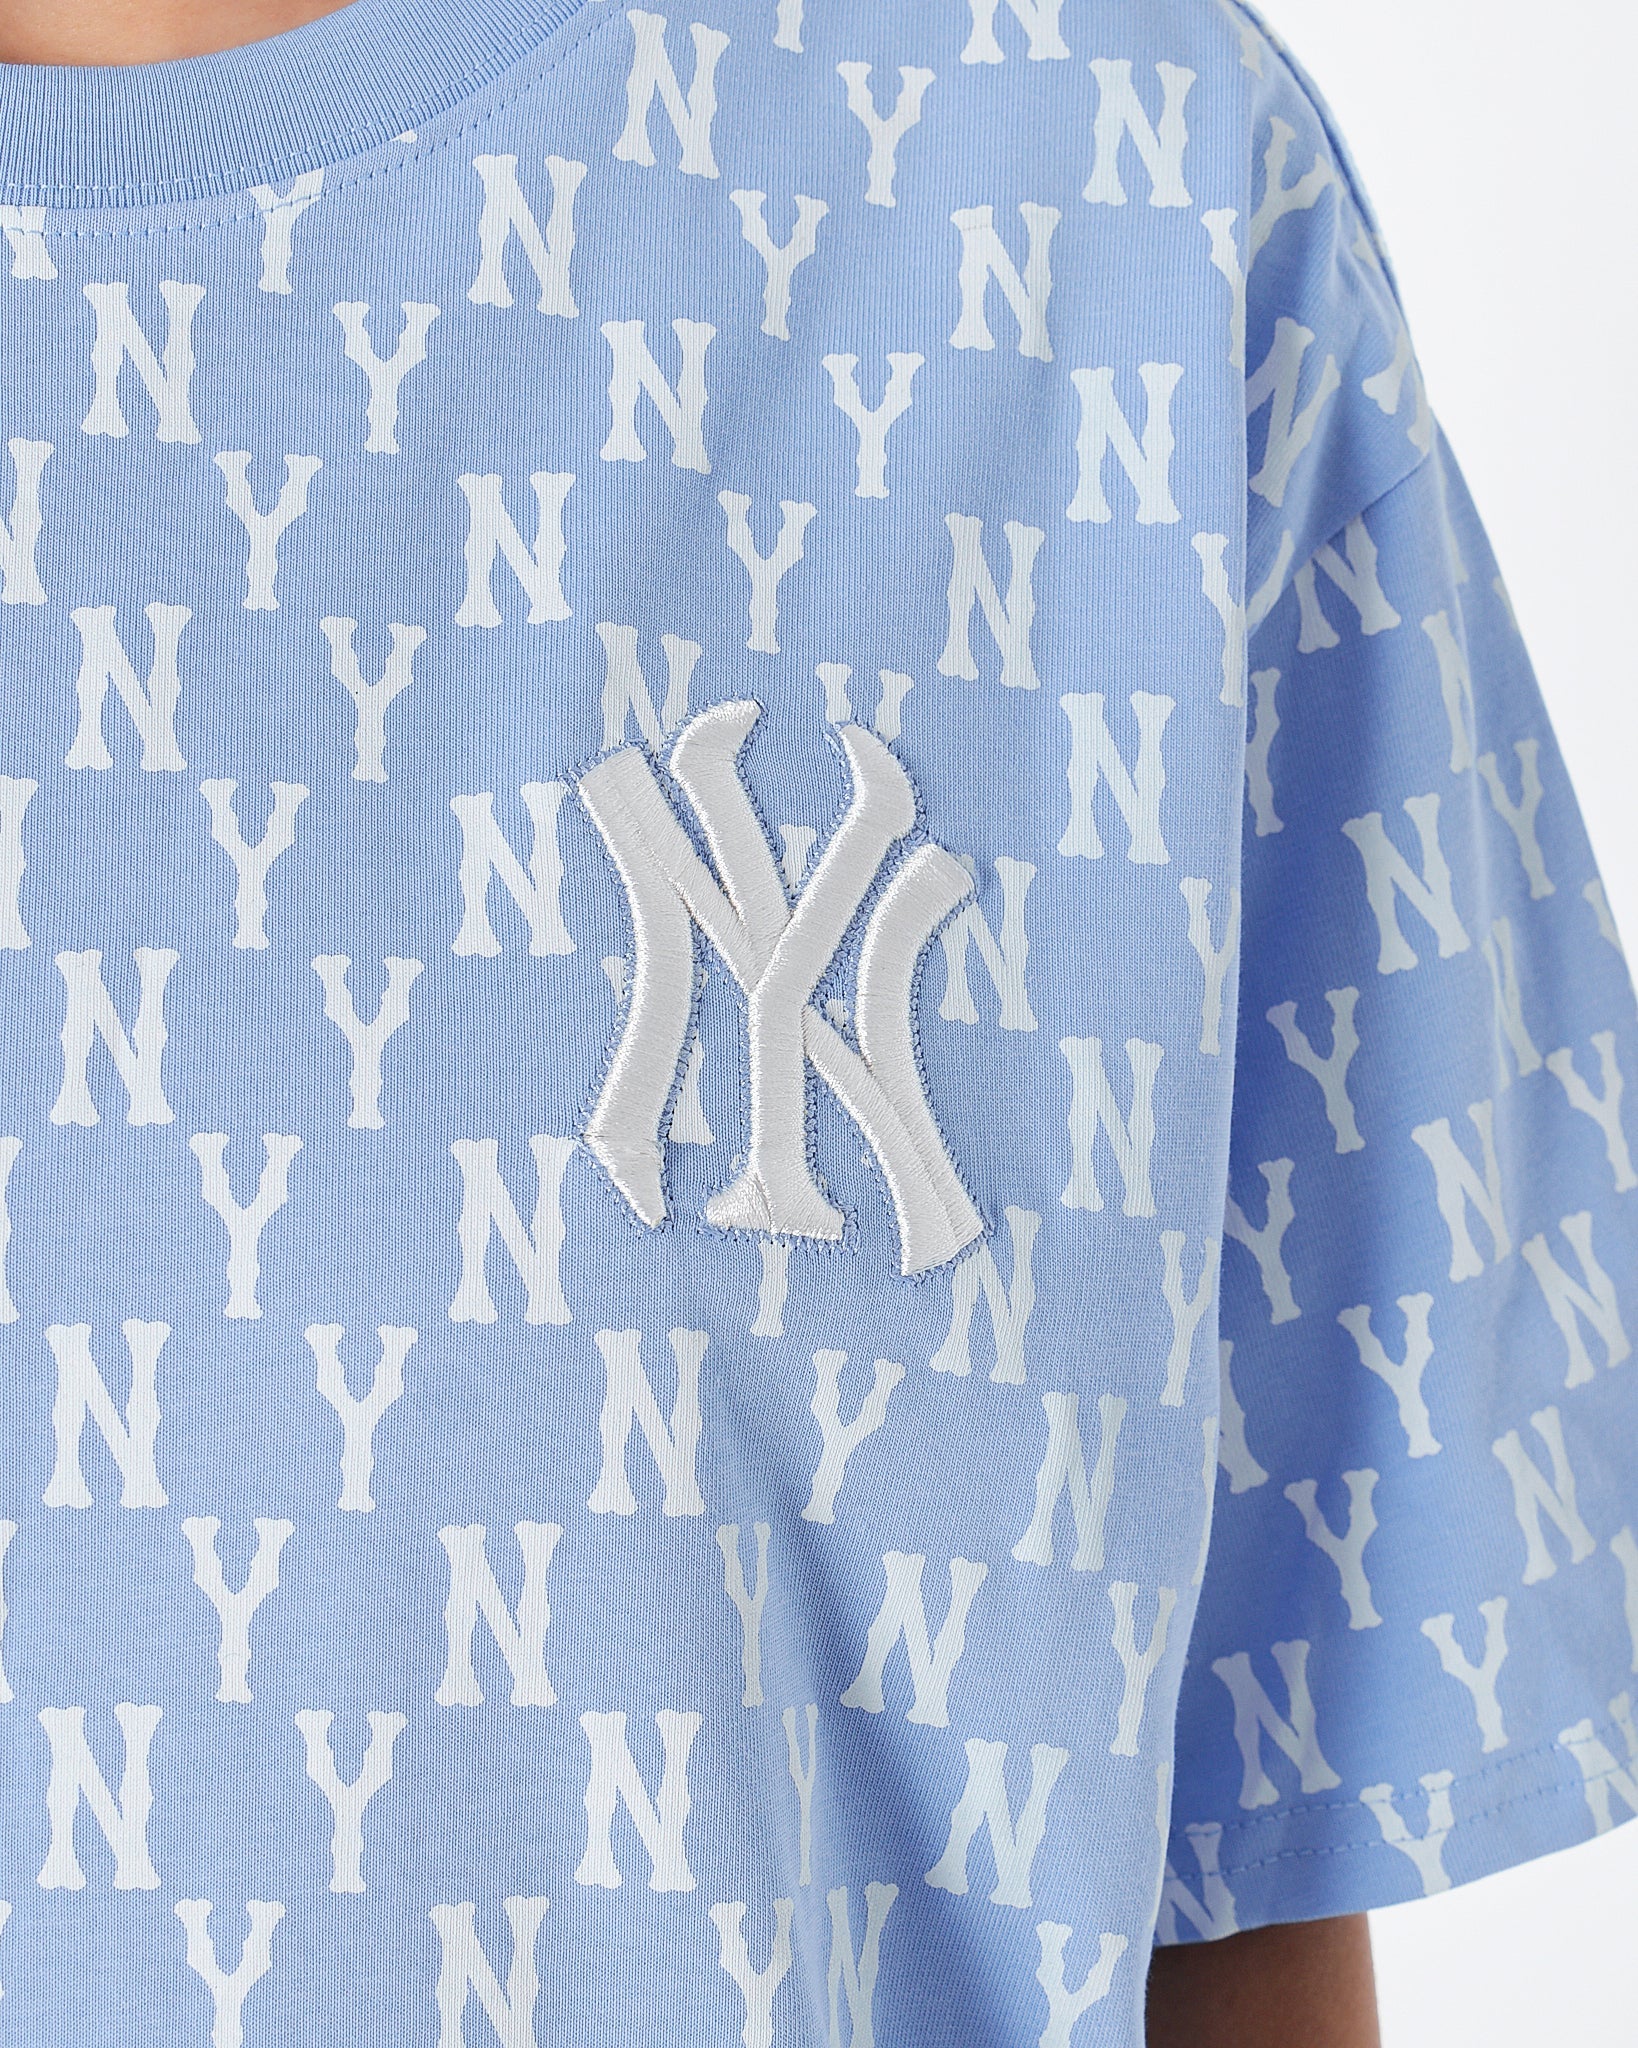 MOI OUTFIT-NY Monogram Unisex Blue T-Shirt 19.90